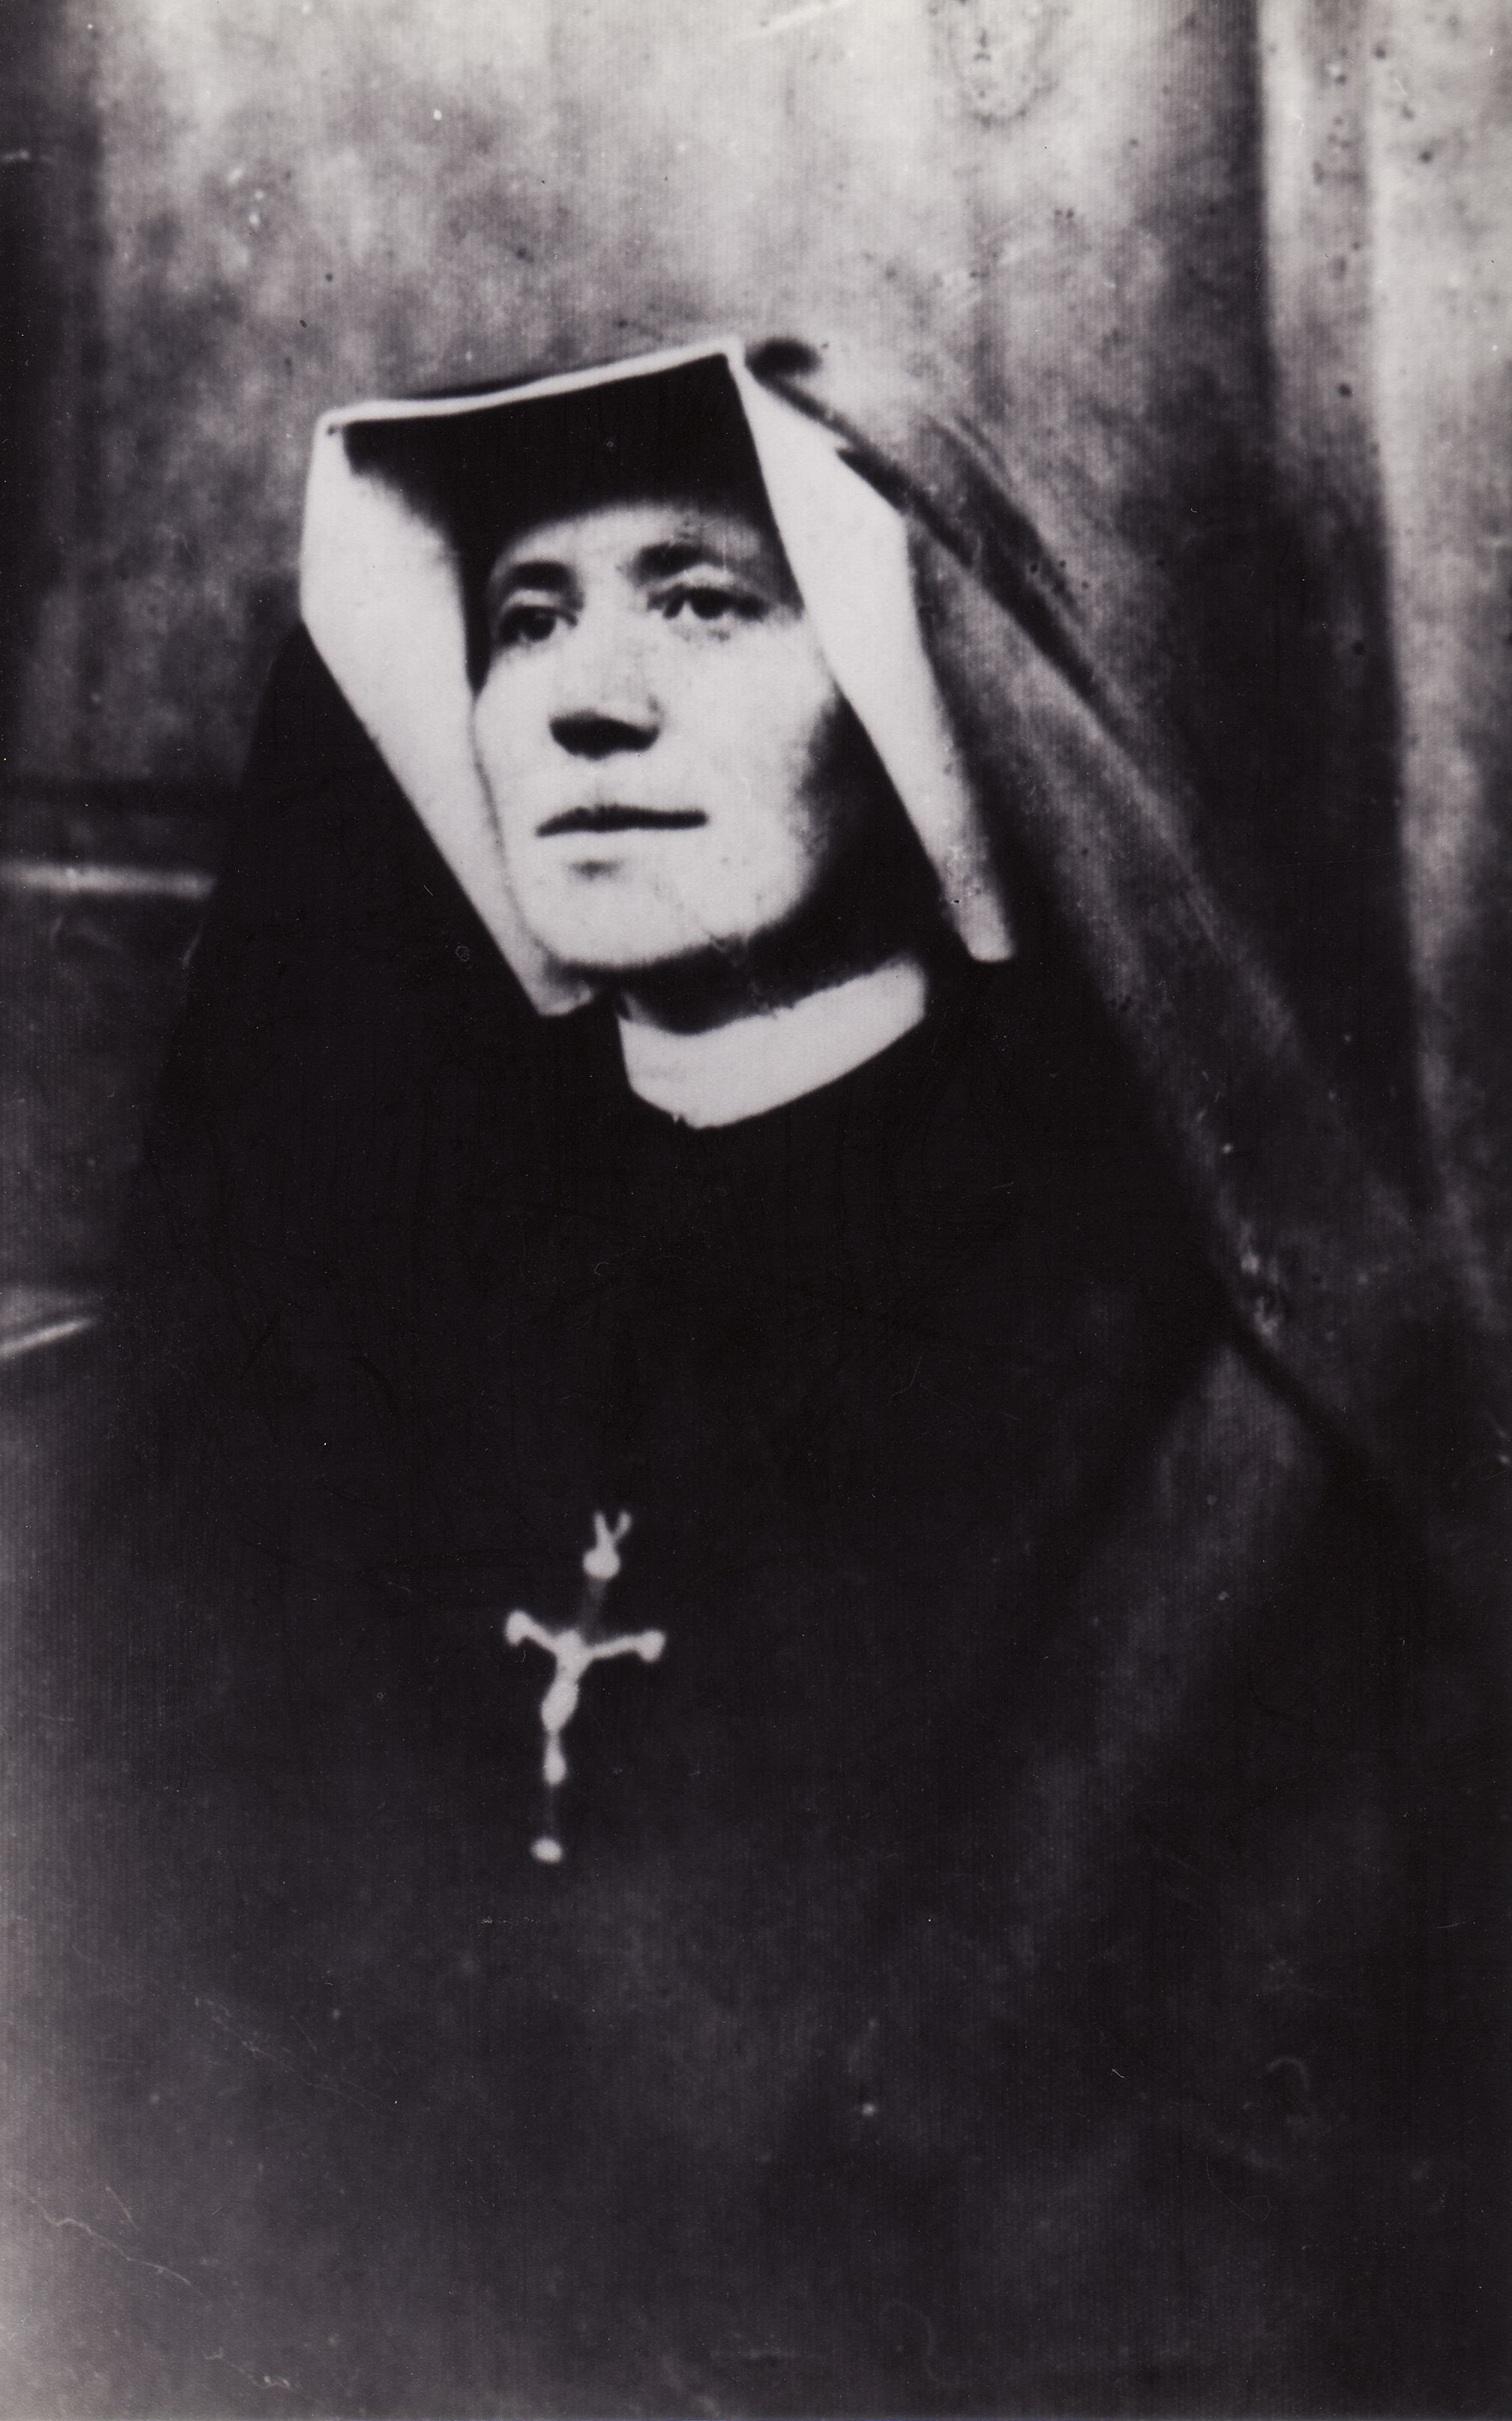 Santa Faustina Kowalska: apostola della misericordia di Dio